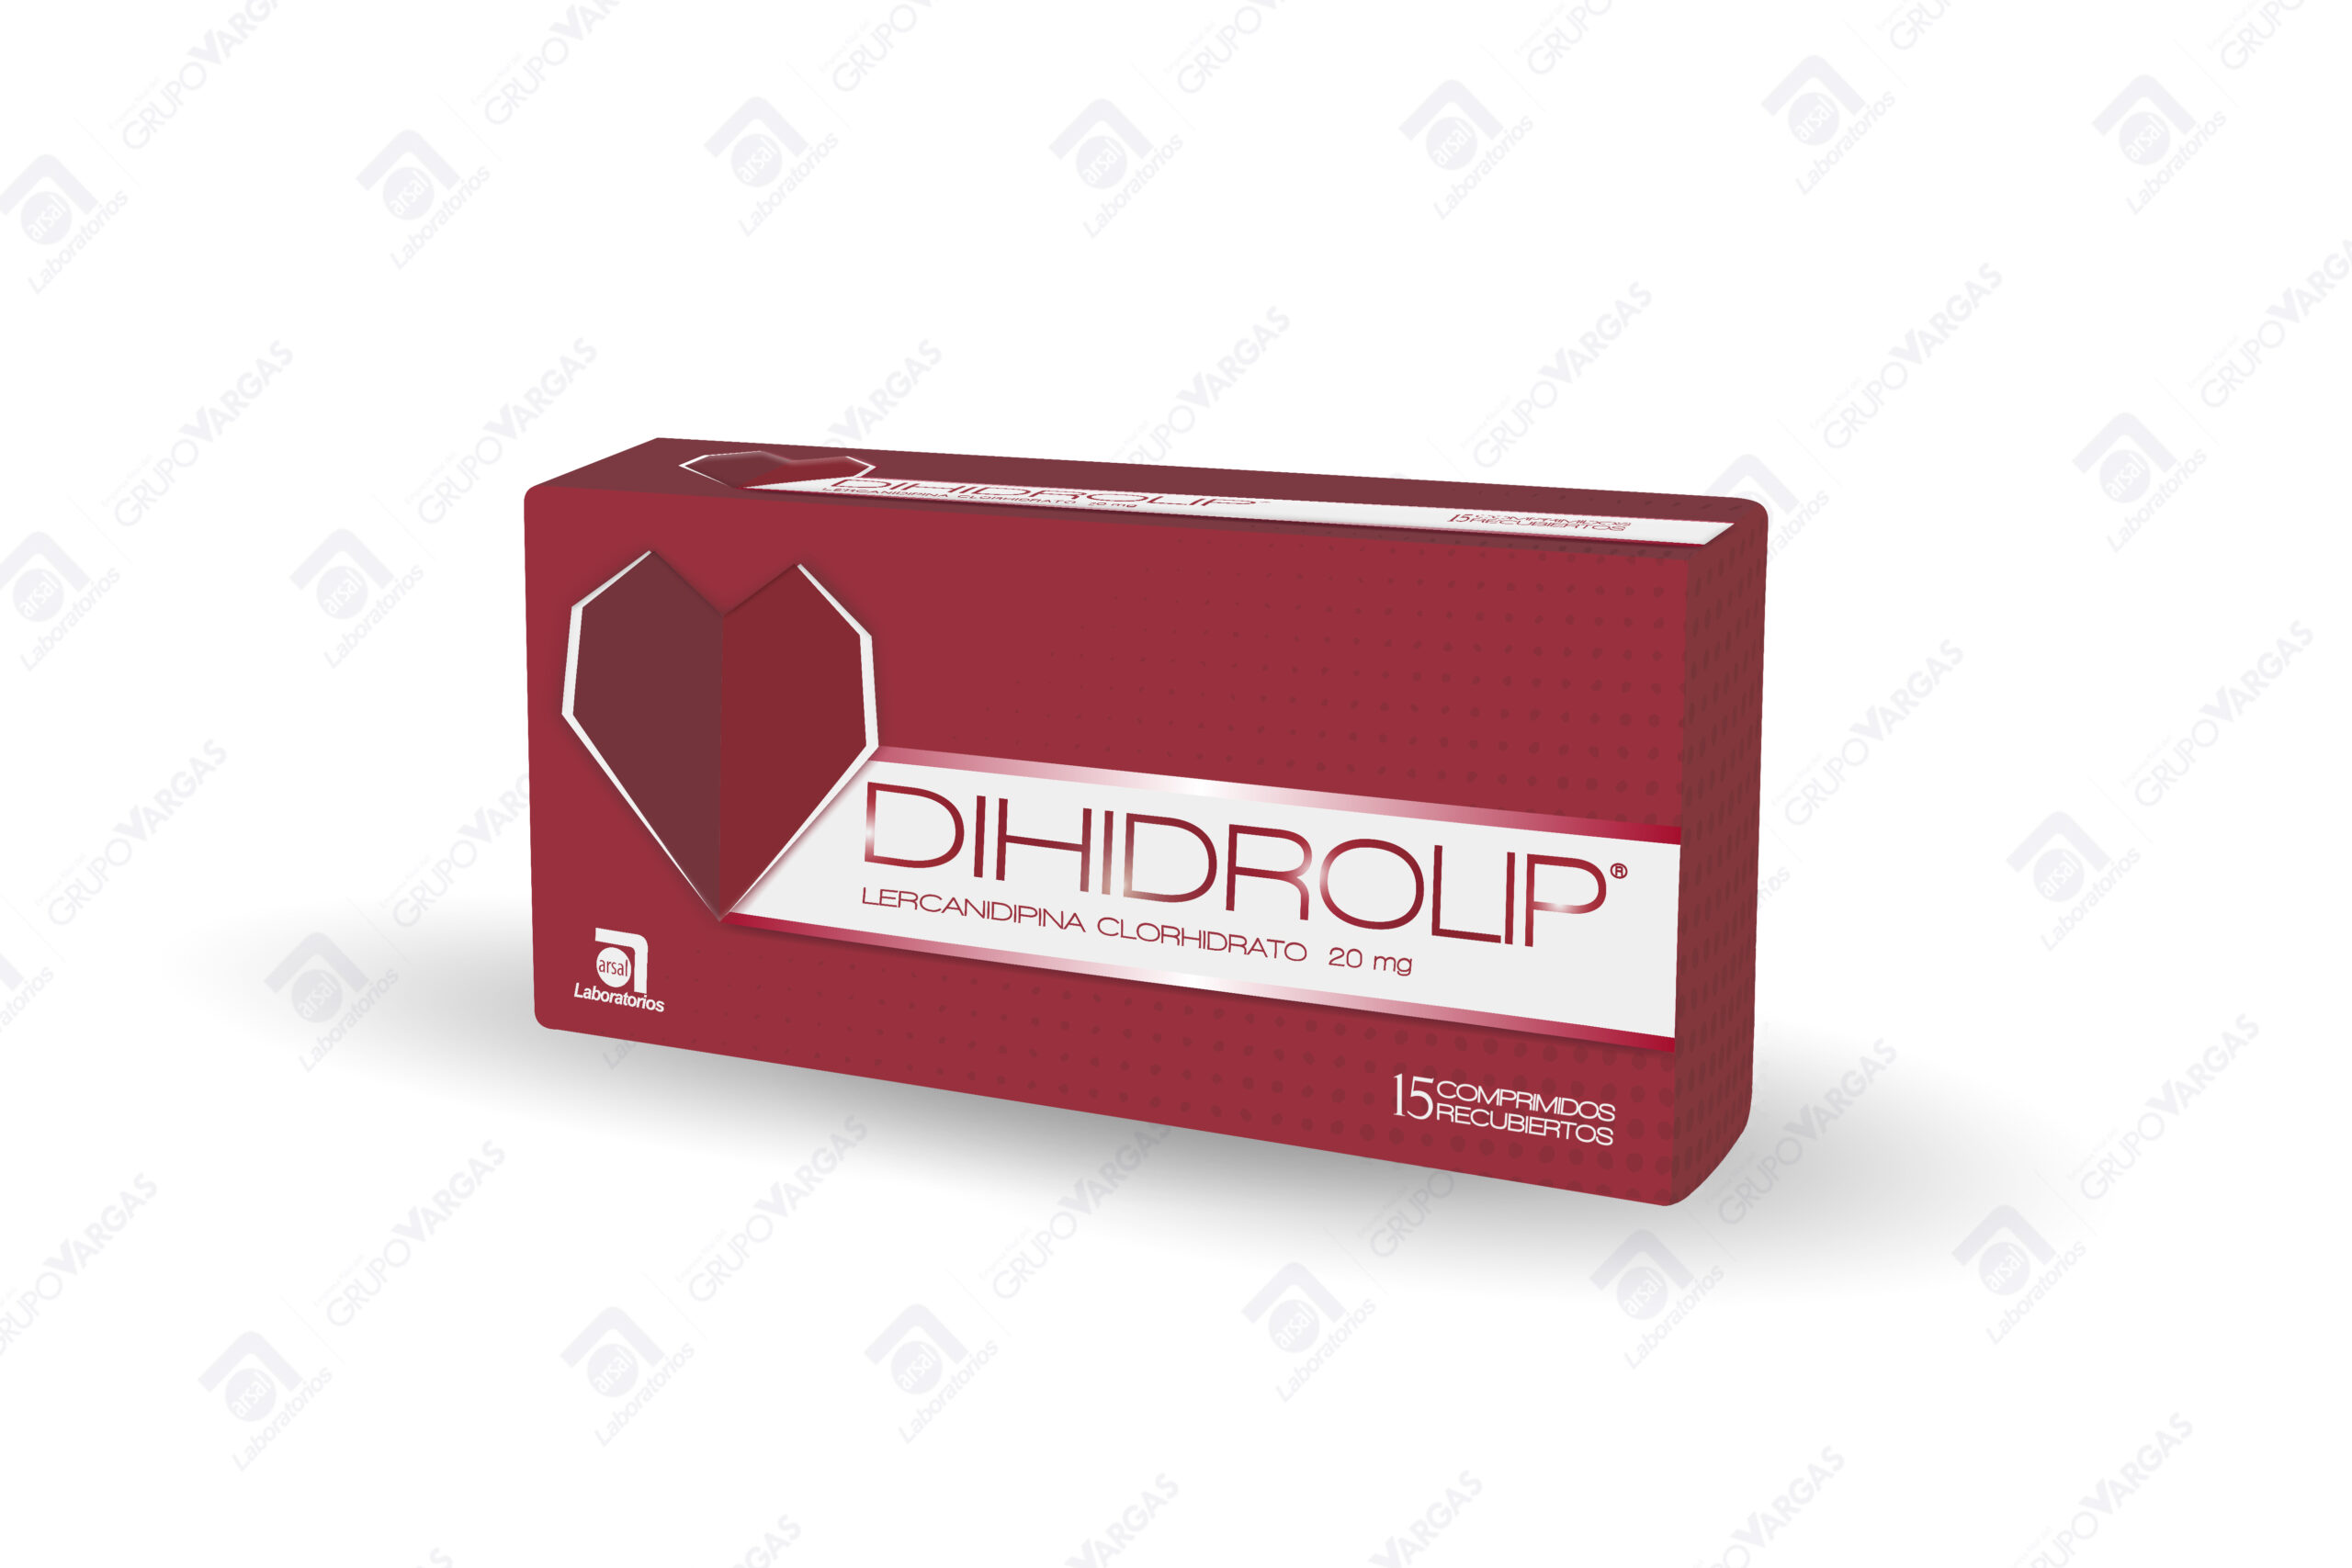 Dihidrolip® 20mg x 15 comprimidos recubiertos